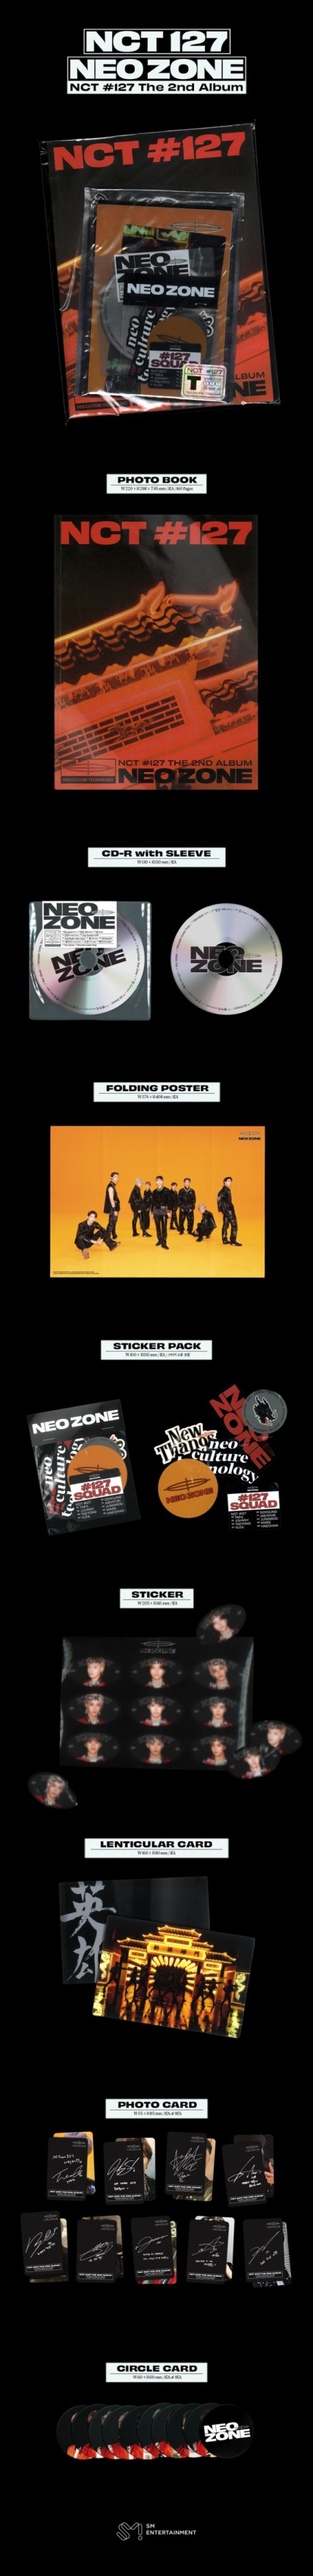 NCT 127｜韓国セカンドアルバム『NCT #127 NEO ZONE』新ヴァージョンT Ver.が登場